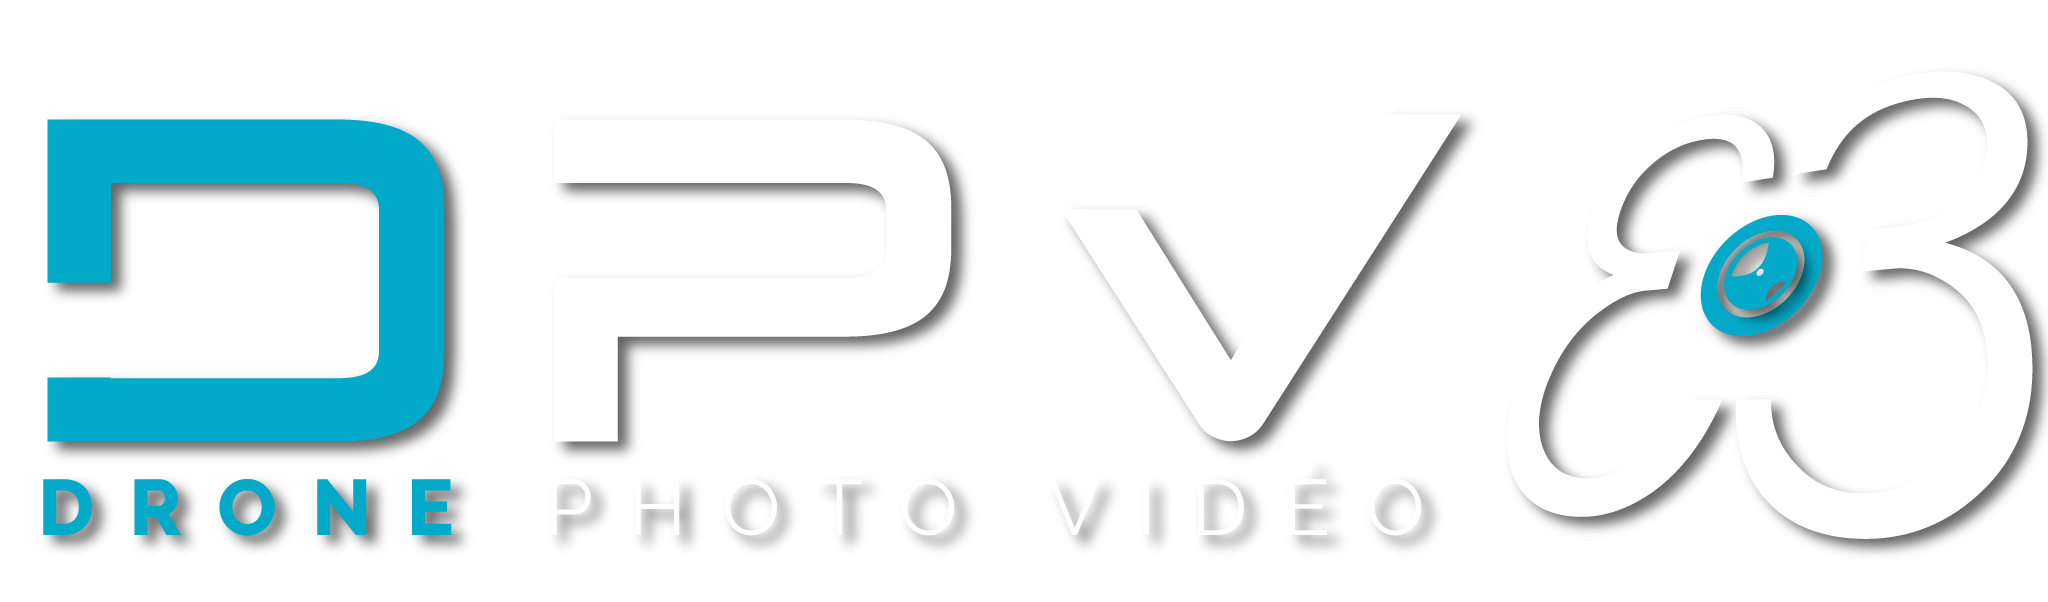 Logo DPV33 2023 blanc v.2 HD ombre portee